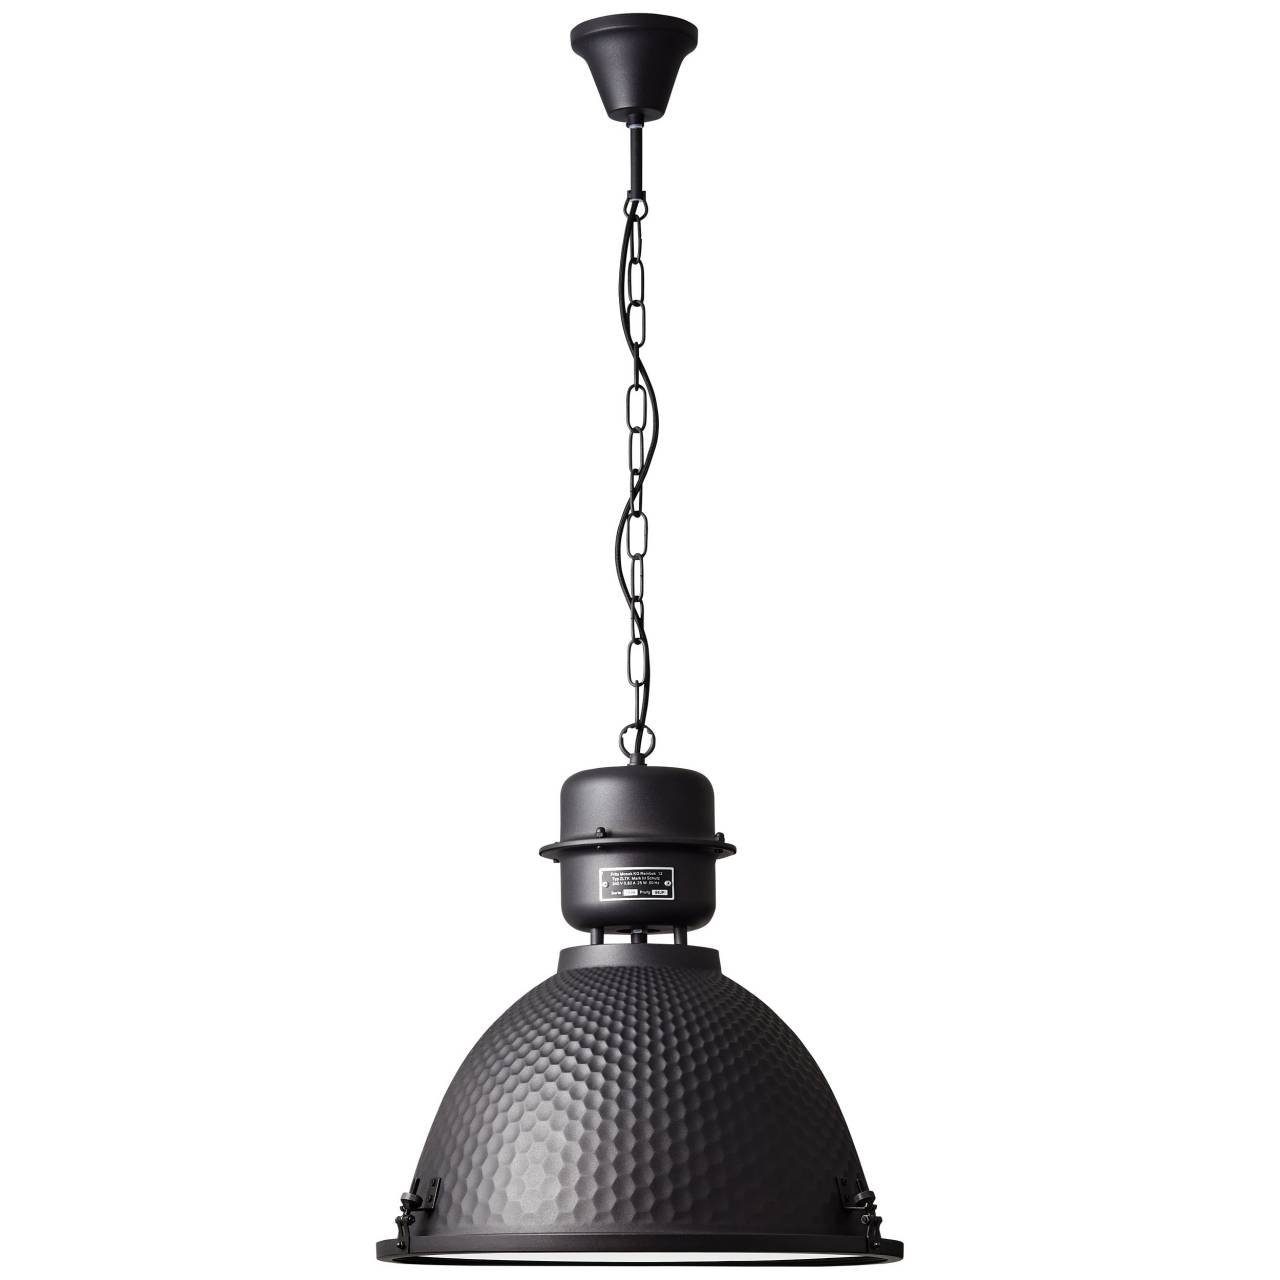 Kiki Lampe geeig 1x schwarz A60, Pendelleuchte 60W, 48cm Kiki, Brilliant korund E27, Pendelleuchte